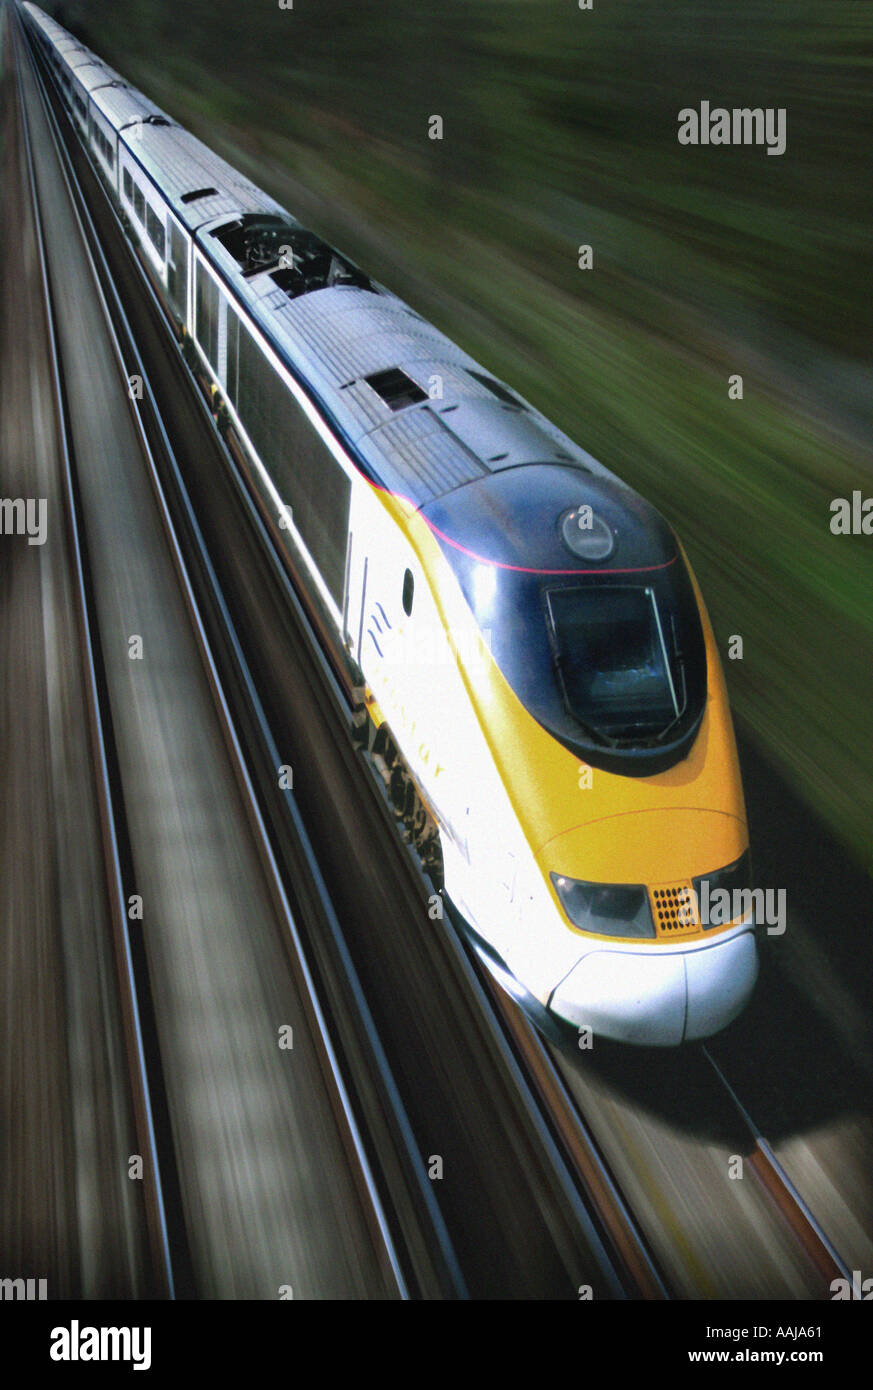 Eurostar train travelling at speed on railway track Stock Photo